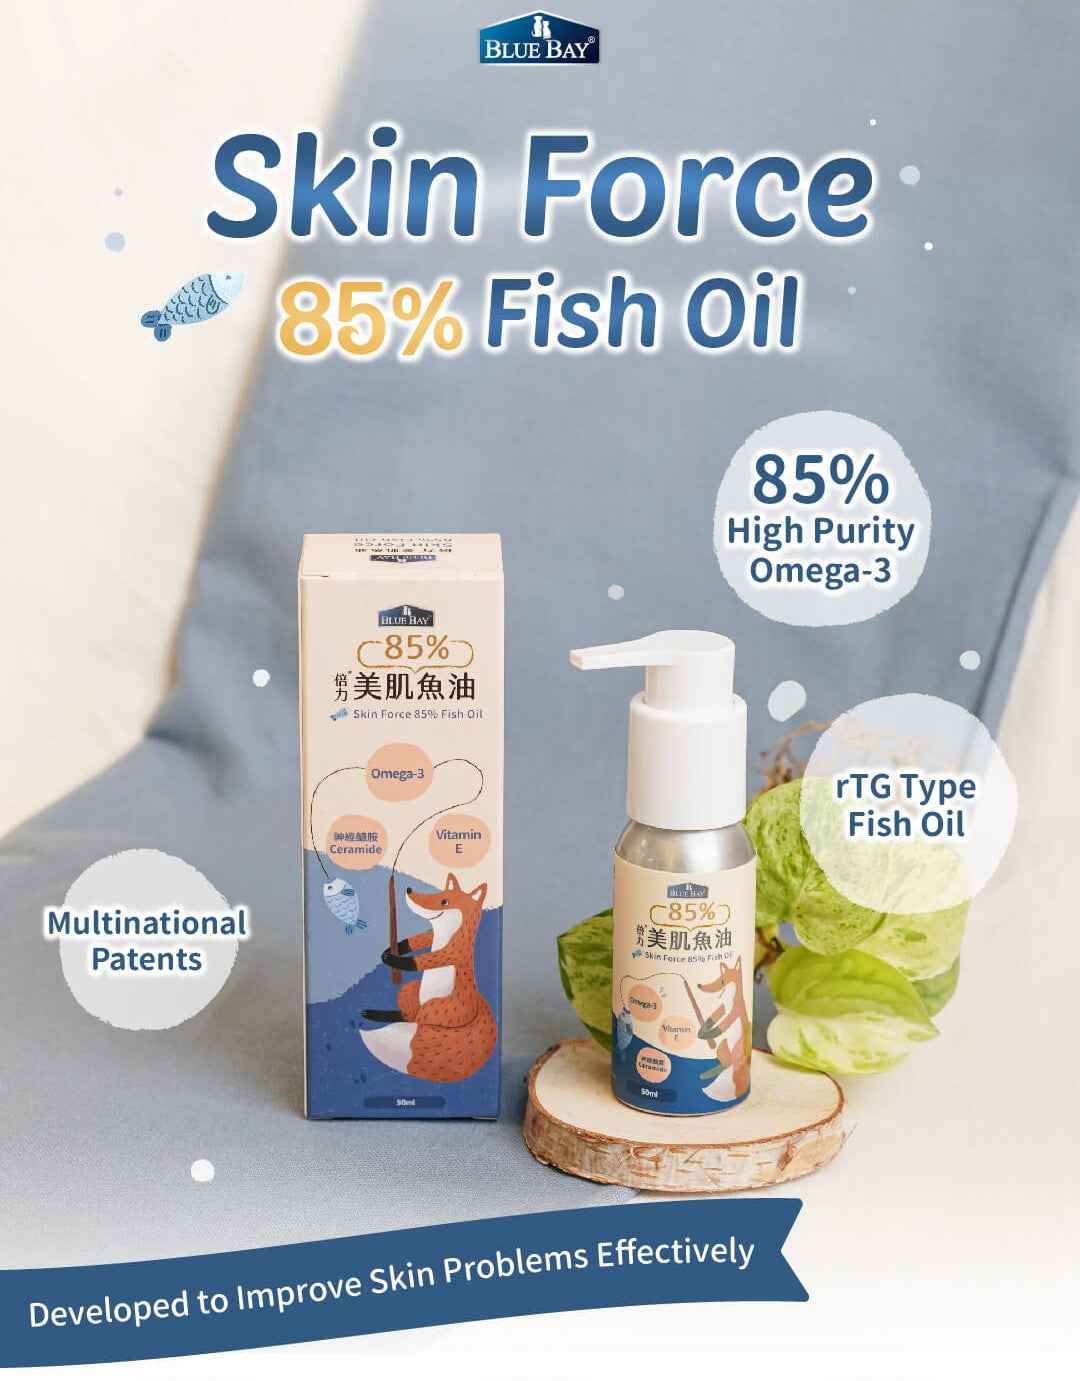 Skin Force Fish Oil